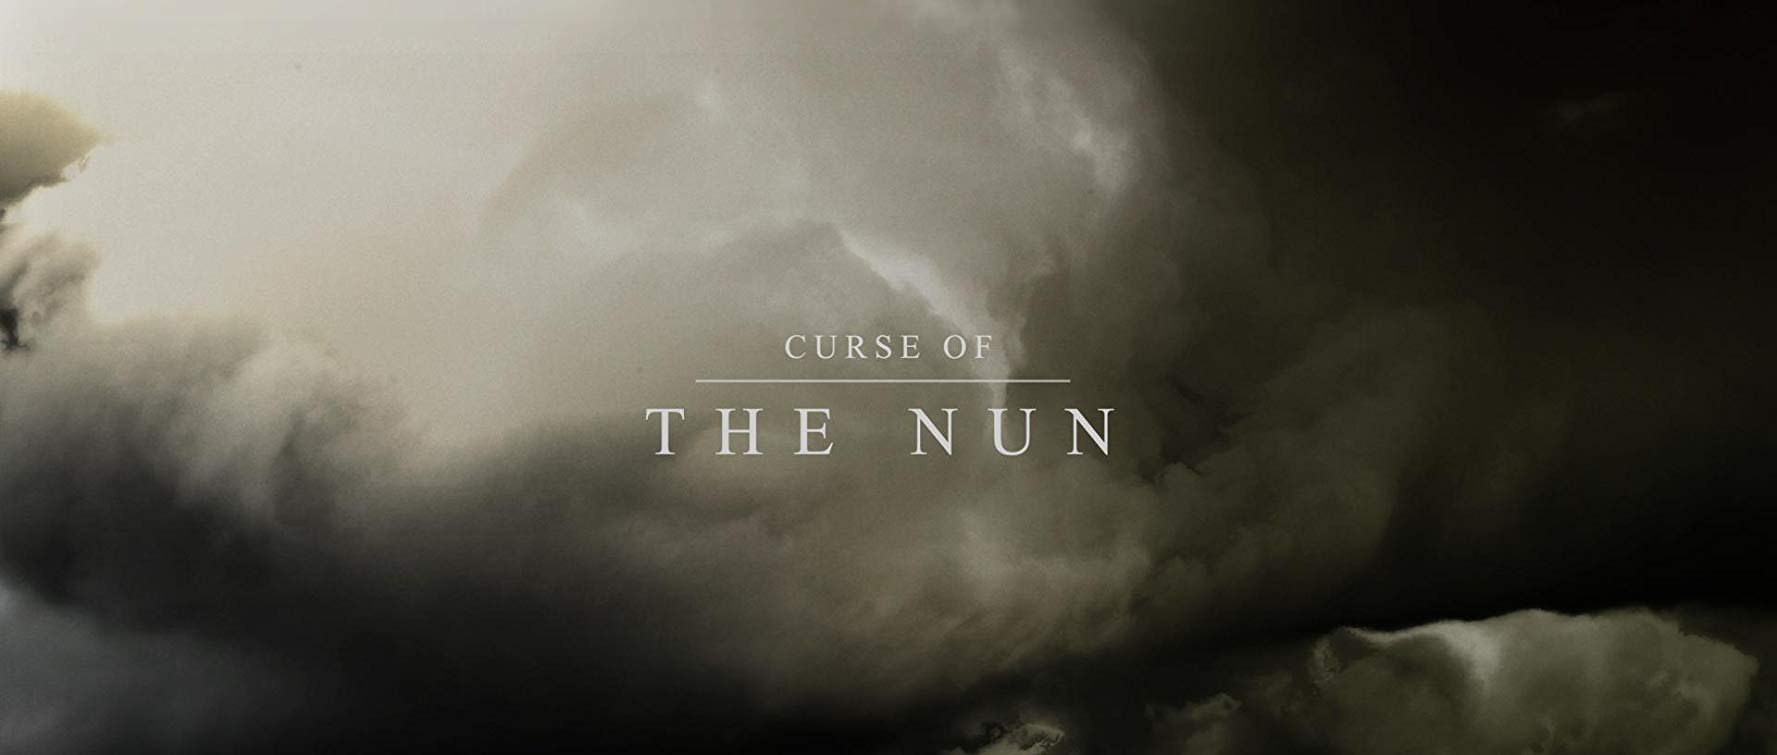 Watch Curse of the Nun